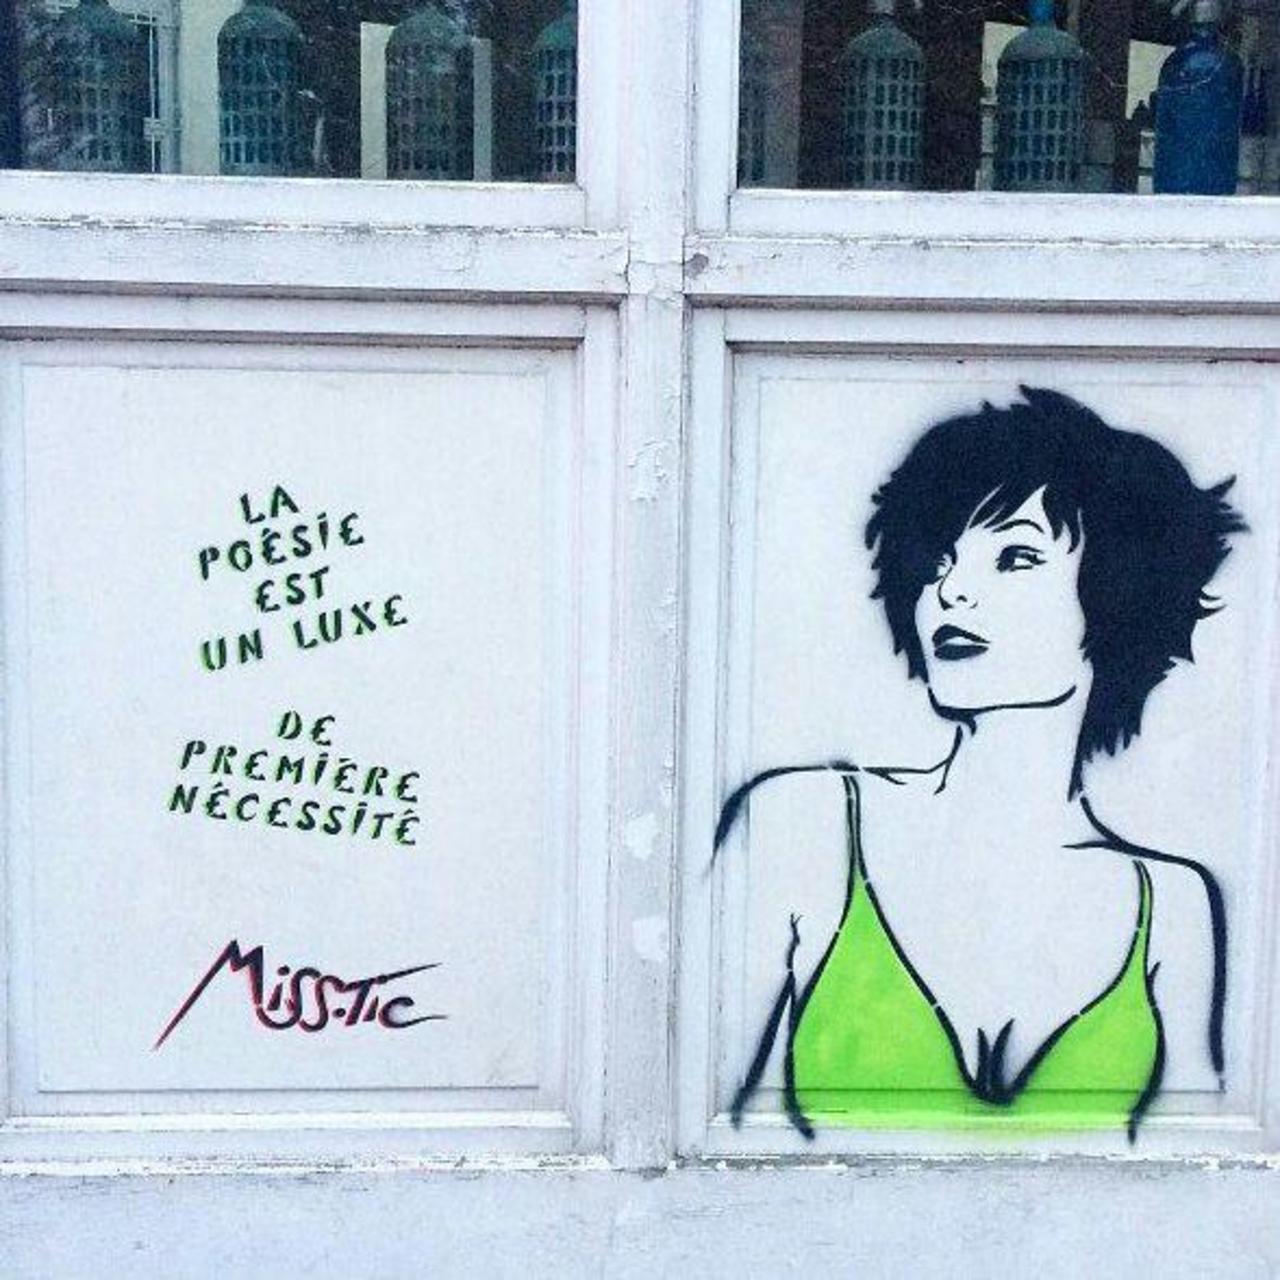 http://ift.tt/1KiqpQt #Paris #graffiti photo by senyorerre http://ift.tt/1GJjlIT #StreetArt http://t.co/lNDnQOoAMf